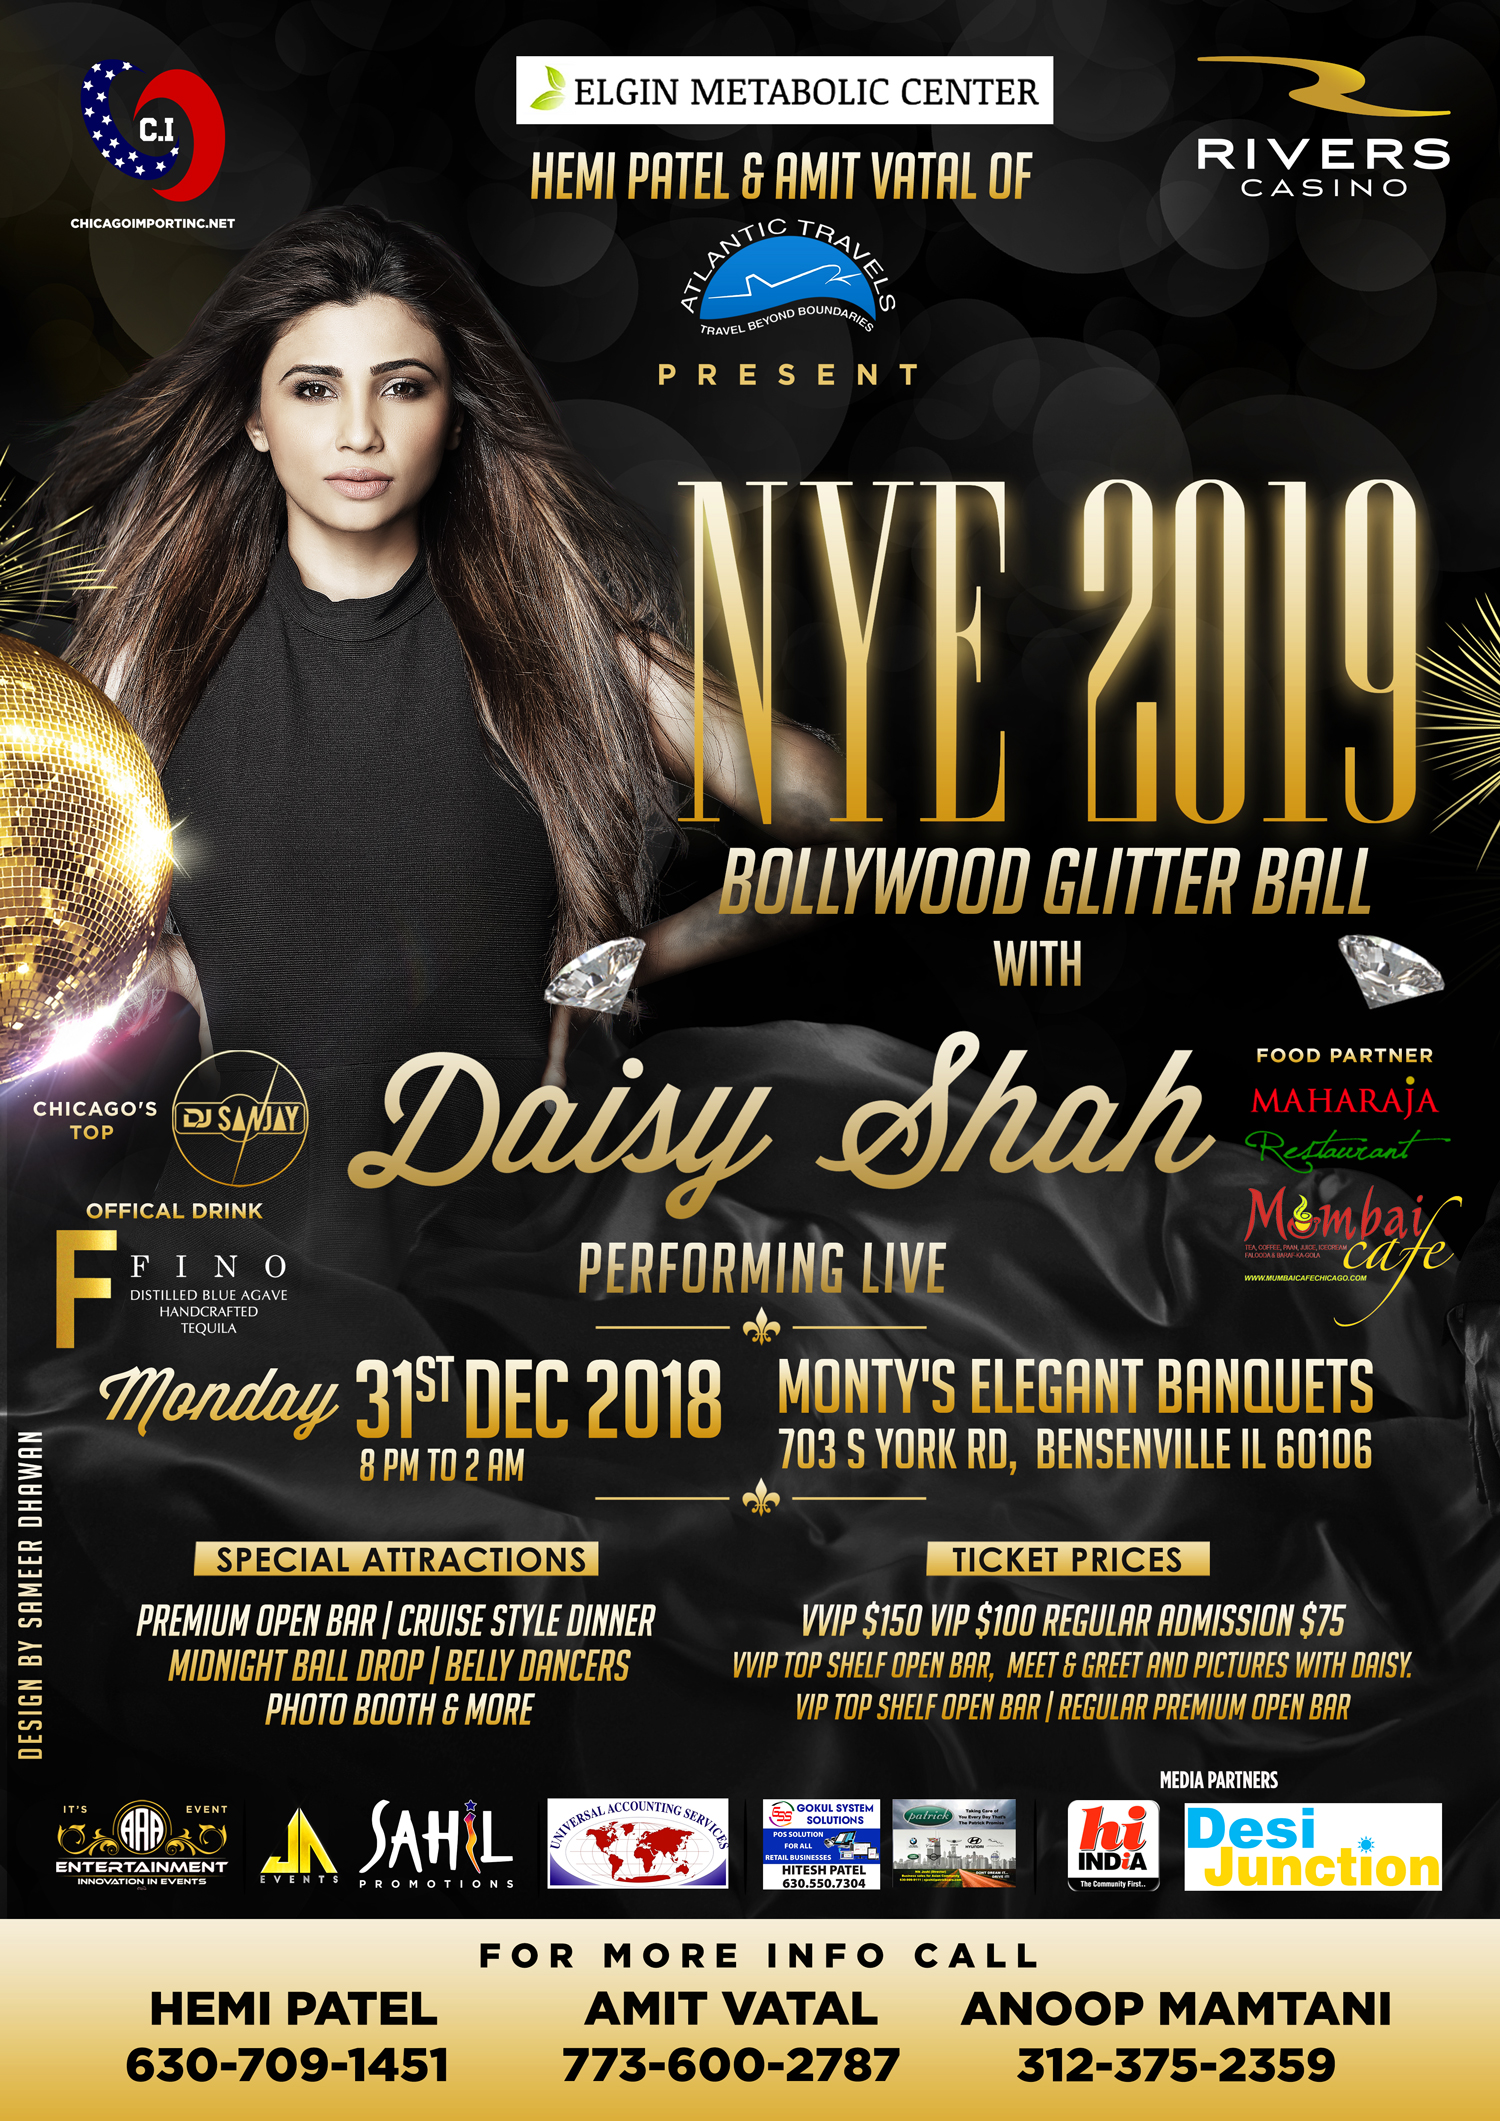 Bollywood Glitter Ball With Daisy Shah, NYE 2019